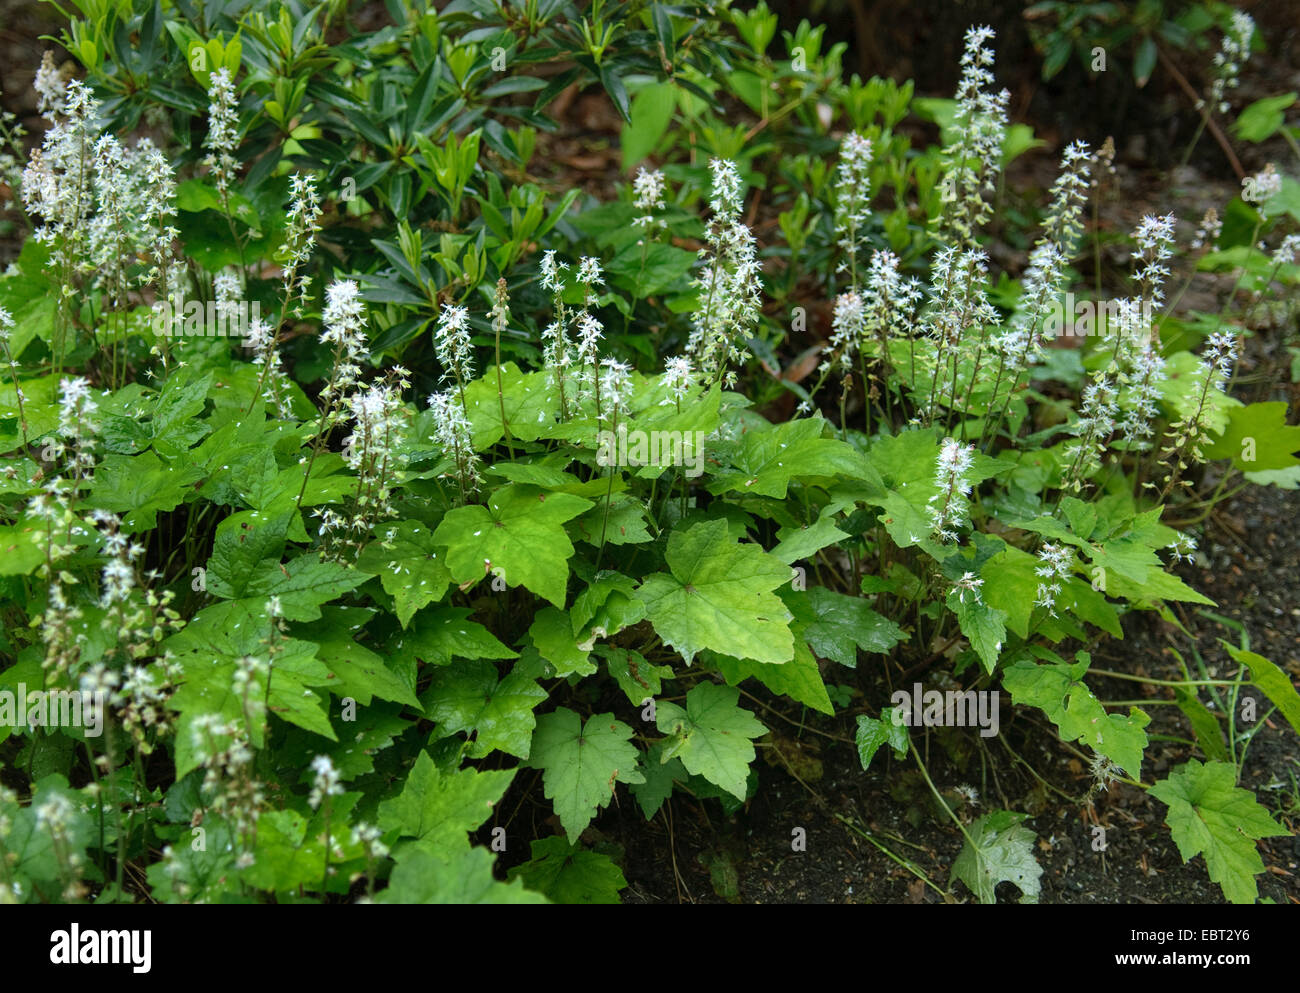 heart-leaved foam-flower, coolwort (Tiarella cordifolia 'Moorgruen', Tiarella cordifolia Moorgruen), cultivar Moorgruen, blooming Stock Photo